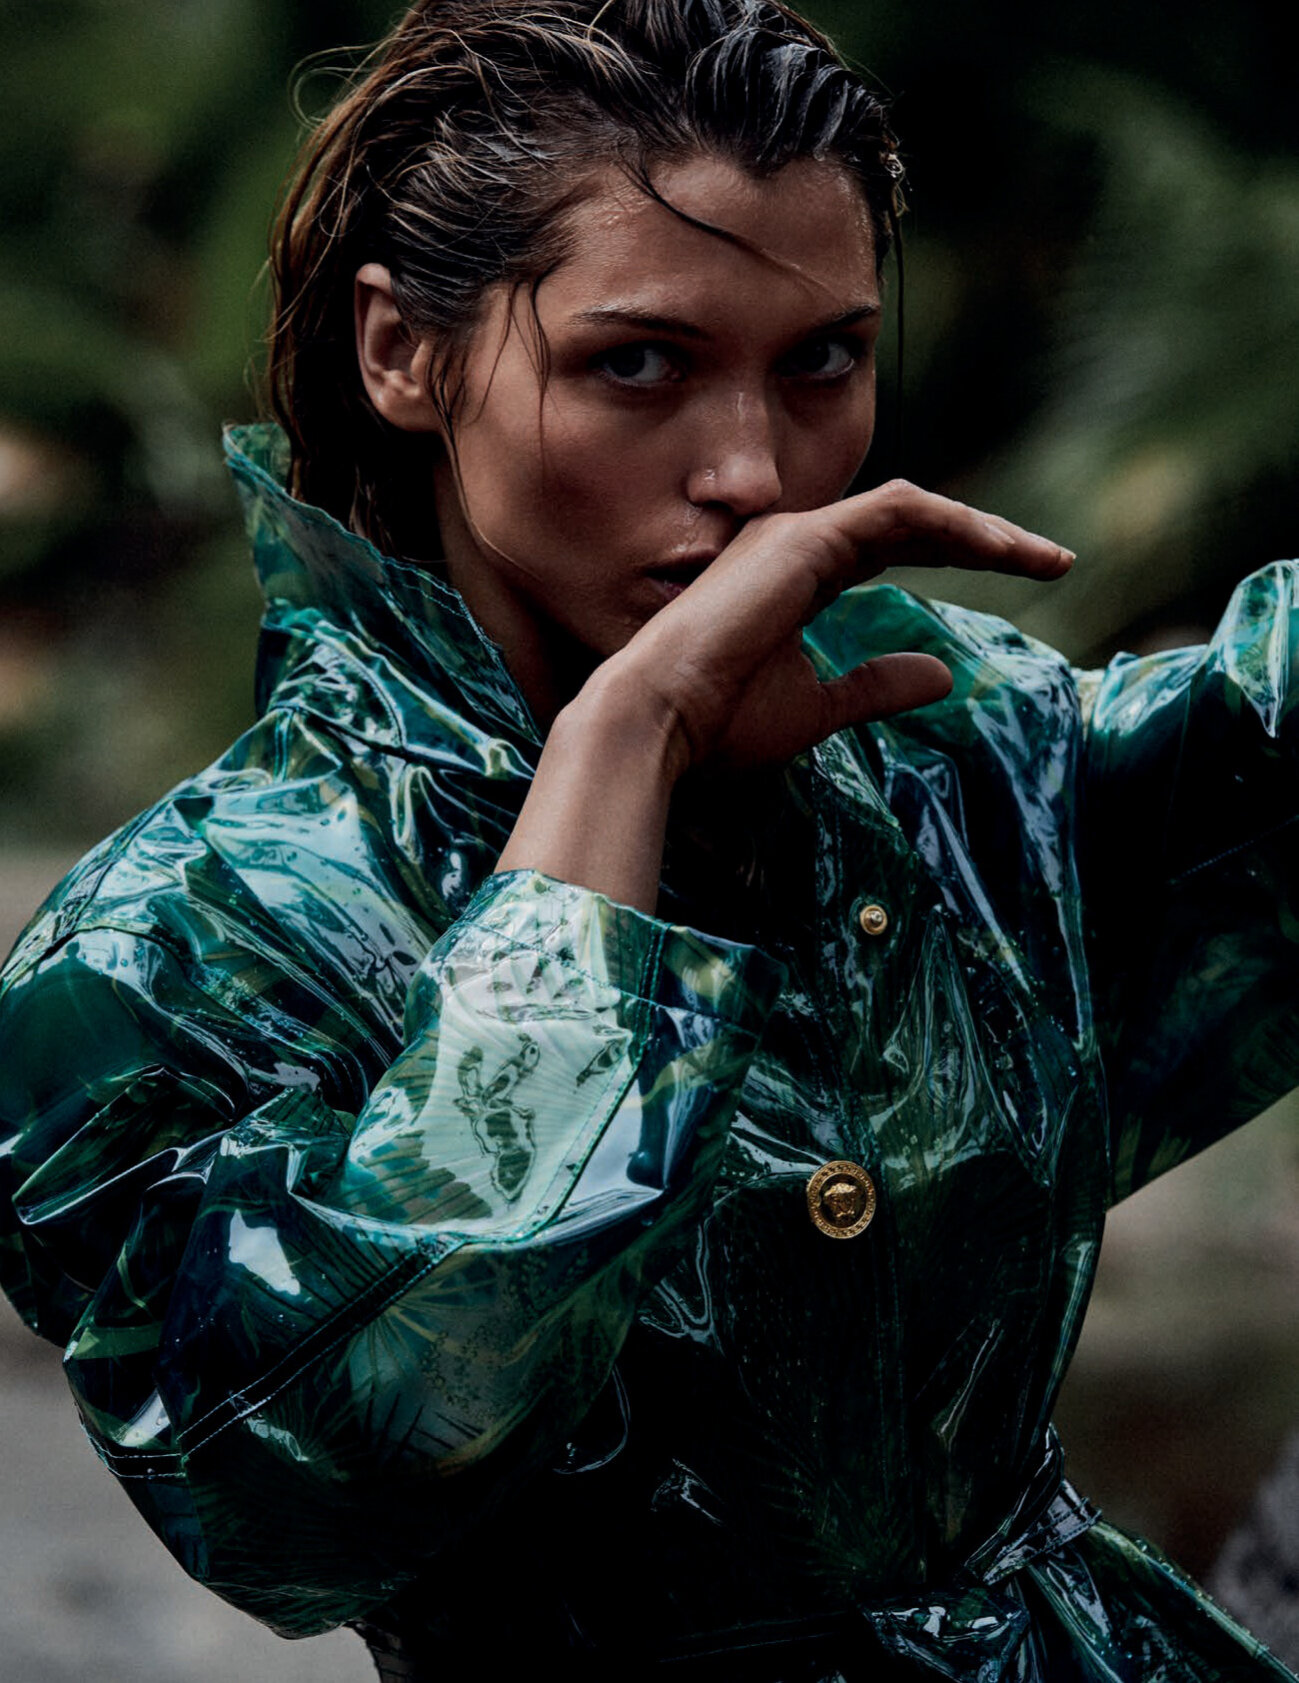 Hana Jirickova by Alvaro Beamud for Vogue Spain May 2020 (2).jpg